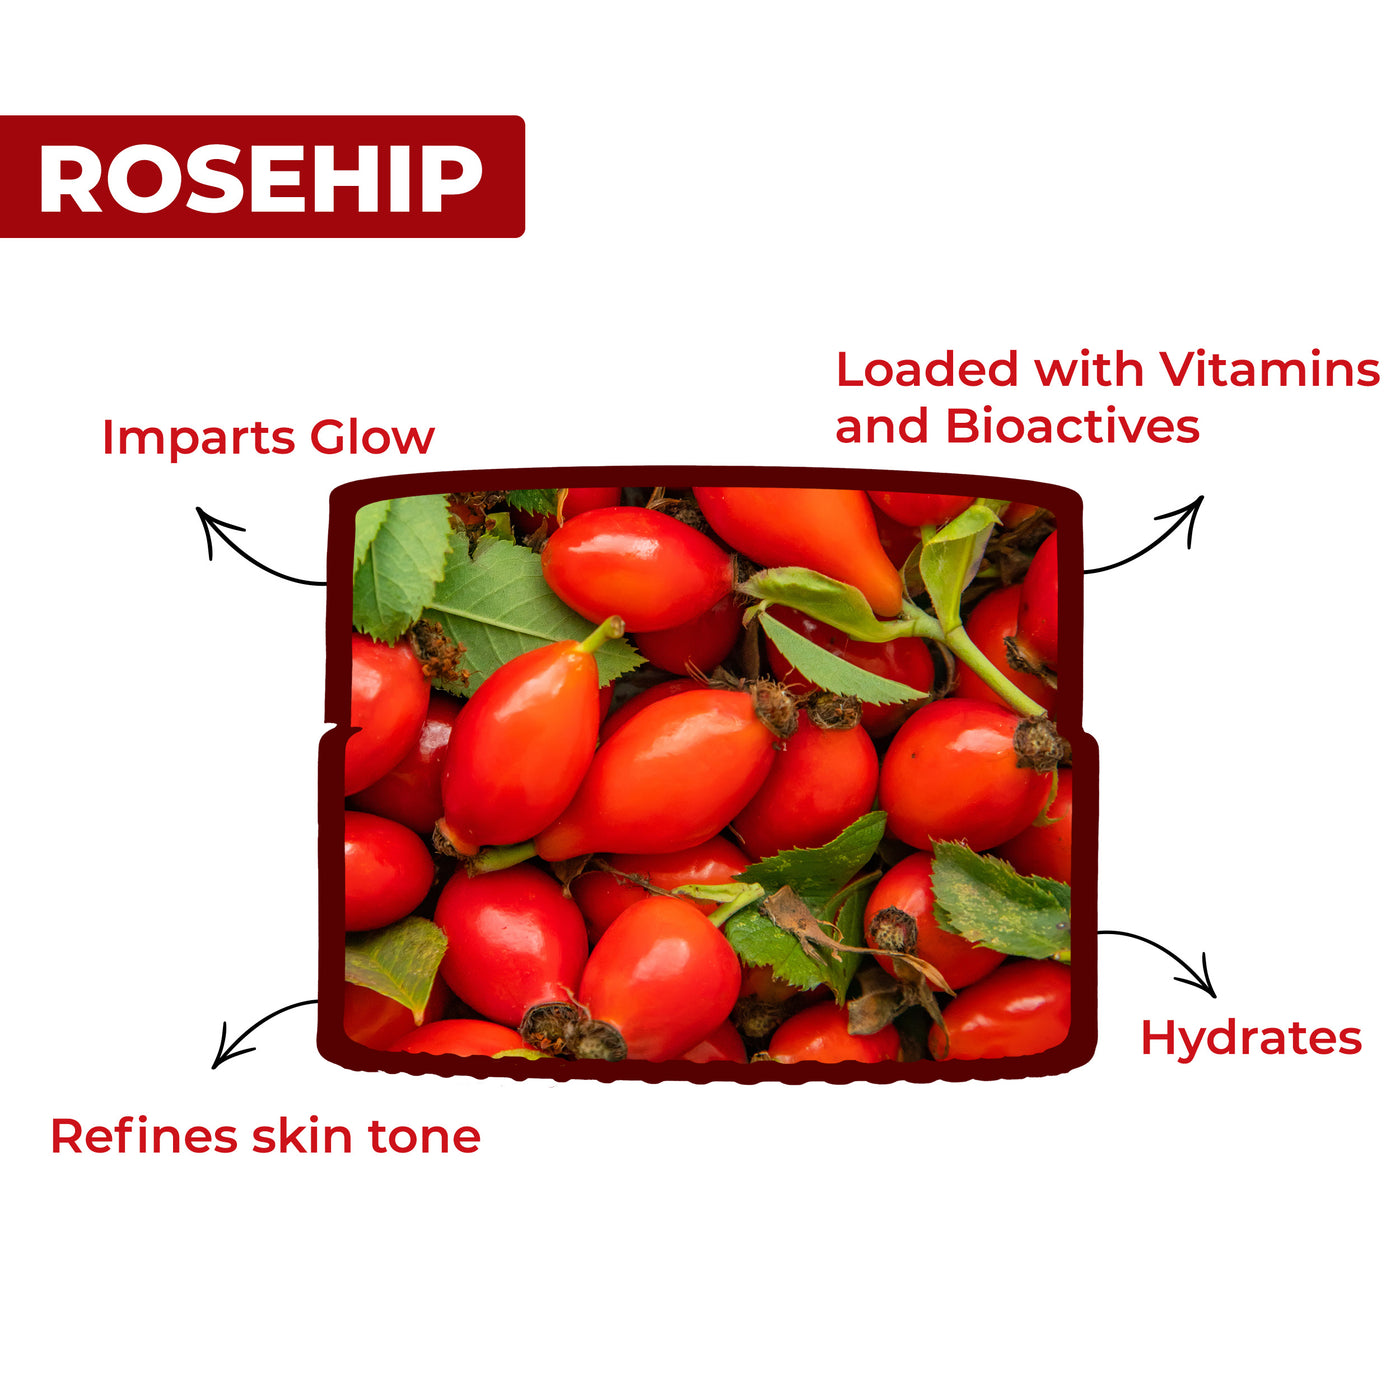 Rosehip Hydrating Glow Face Cream - 80g